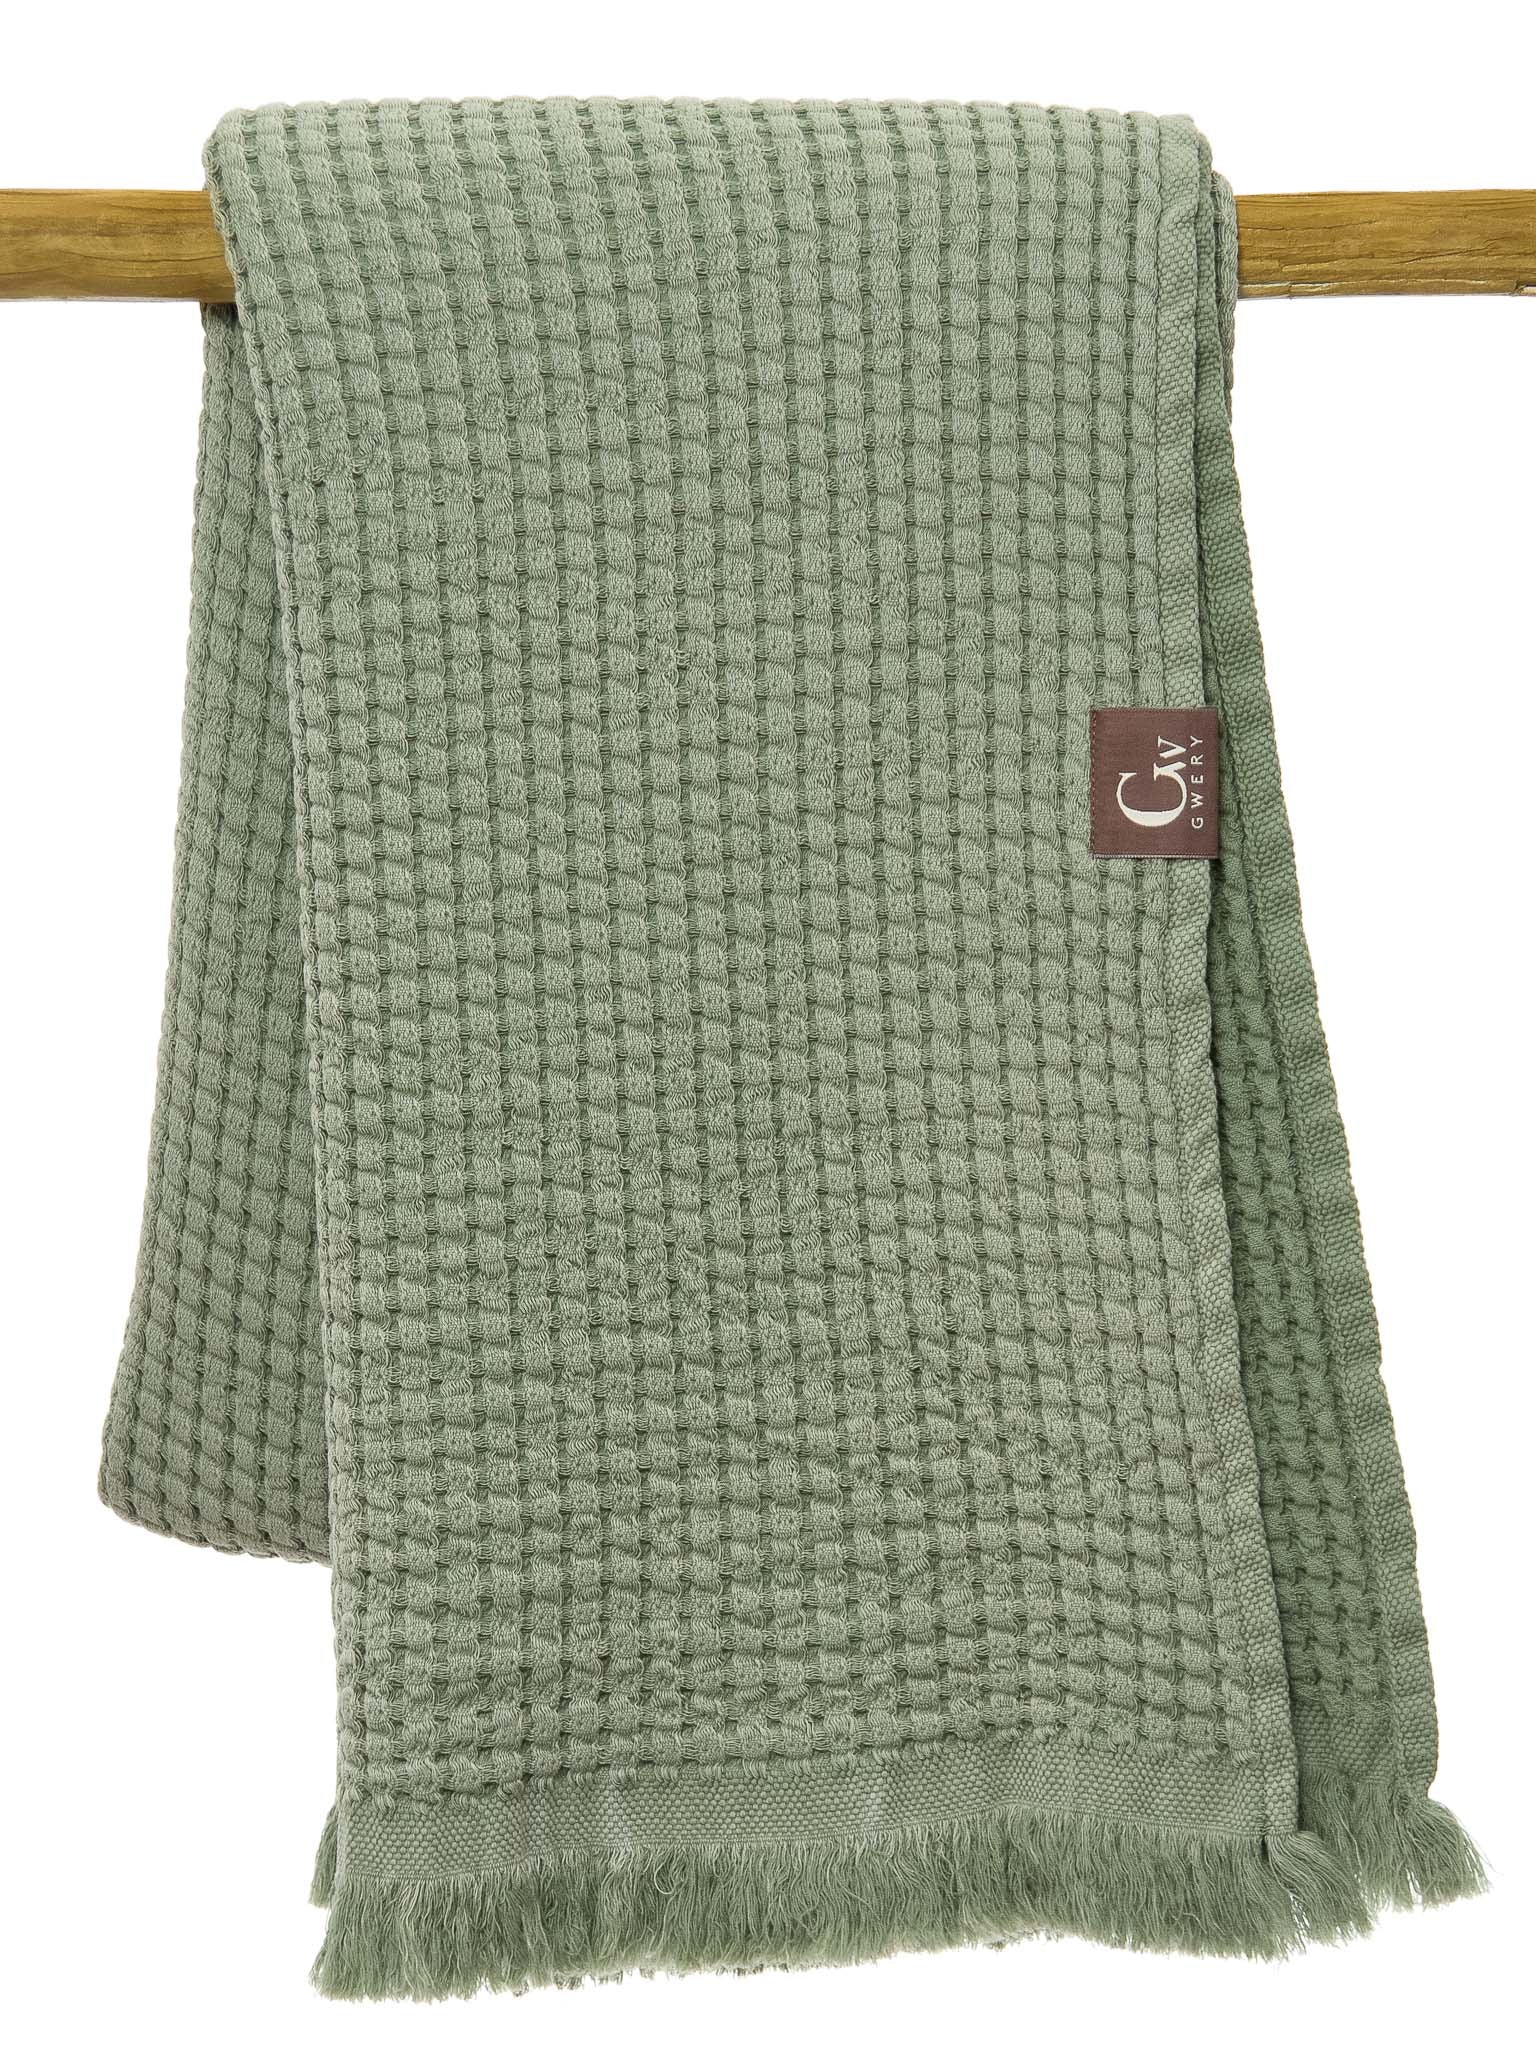 Green double sided, honeycomb beach towel folded